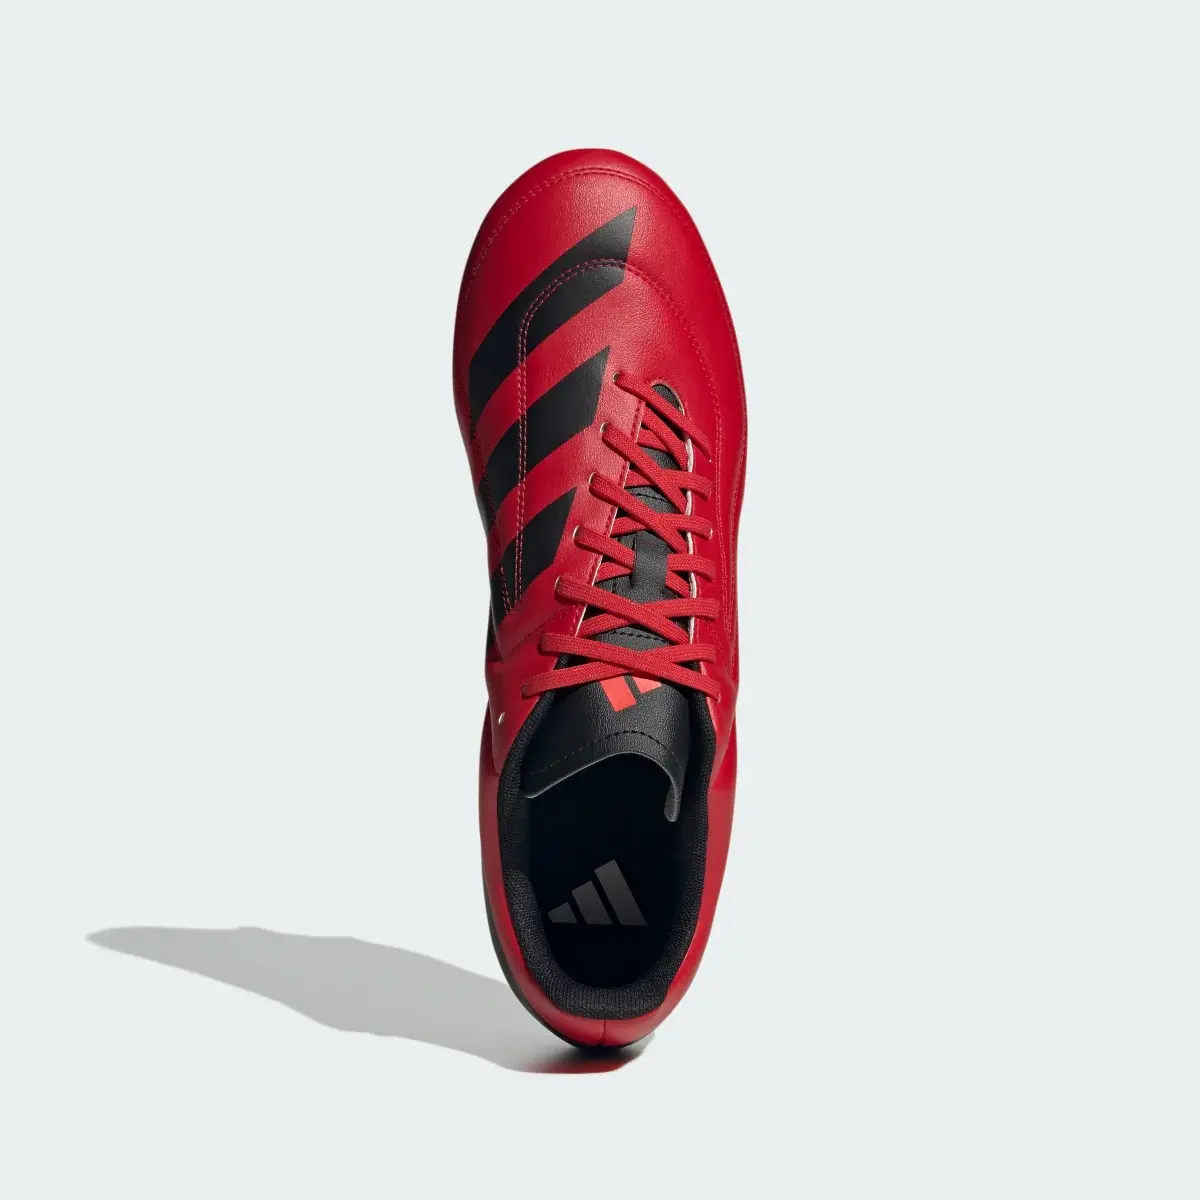 Adidas Botas de Rugby RS15 – Piso mole. 3